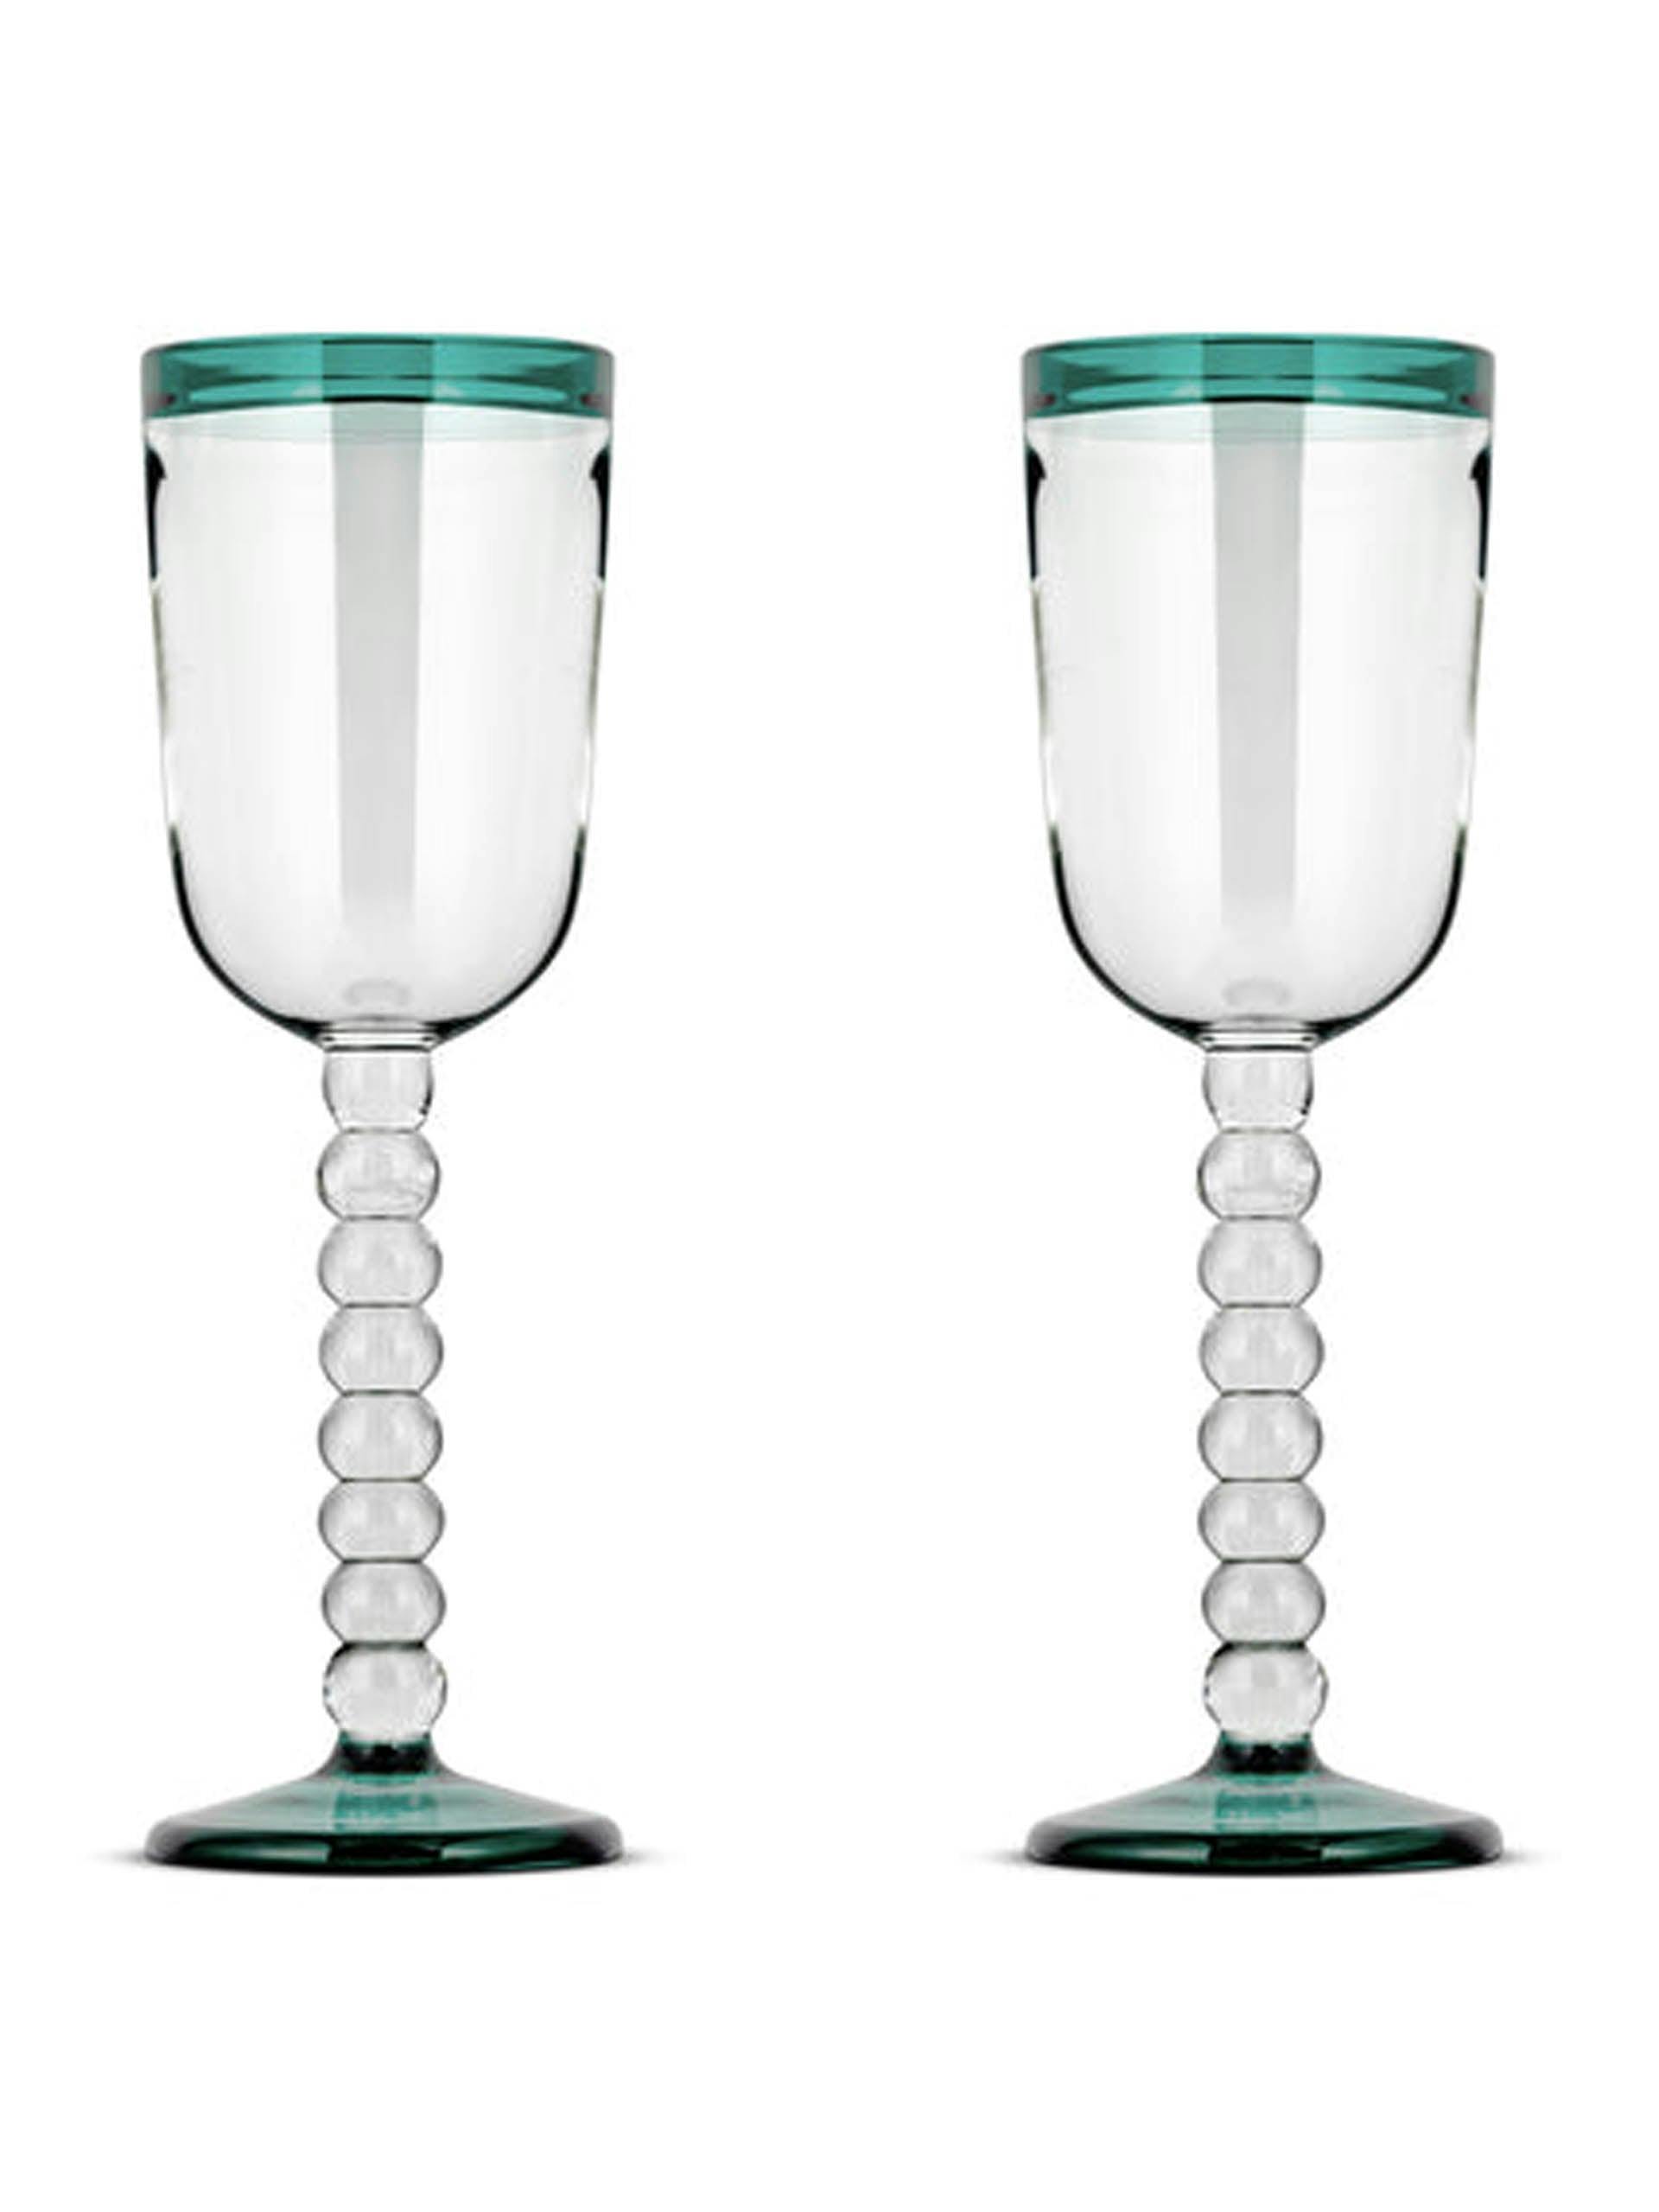 Thimma wine glasses (set of 2)